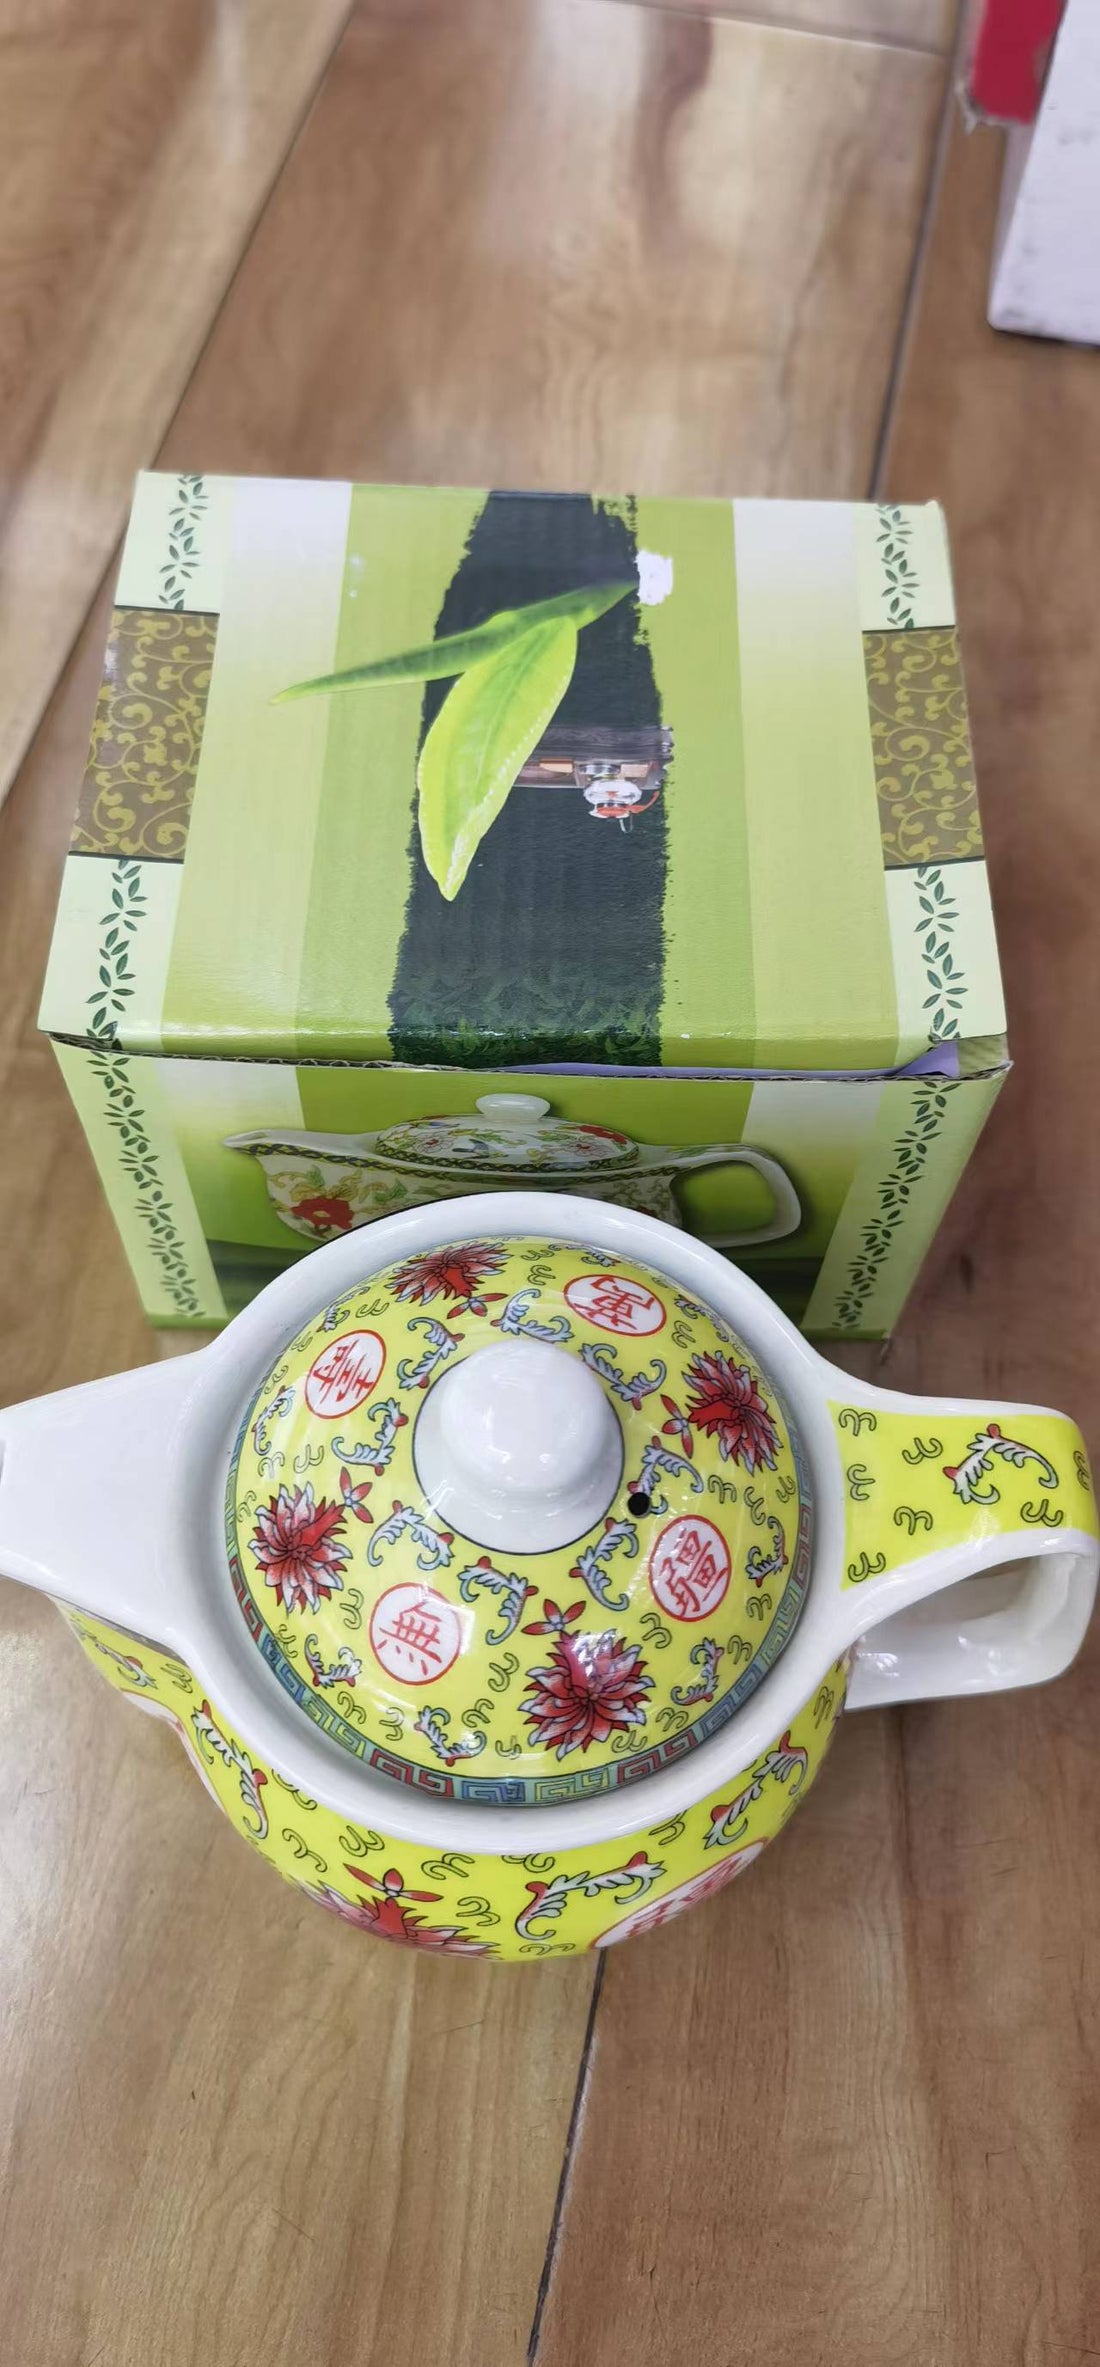 Small Herbal Teapot - Long Life Oriental Design